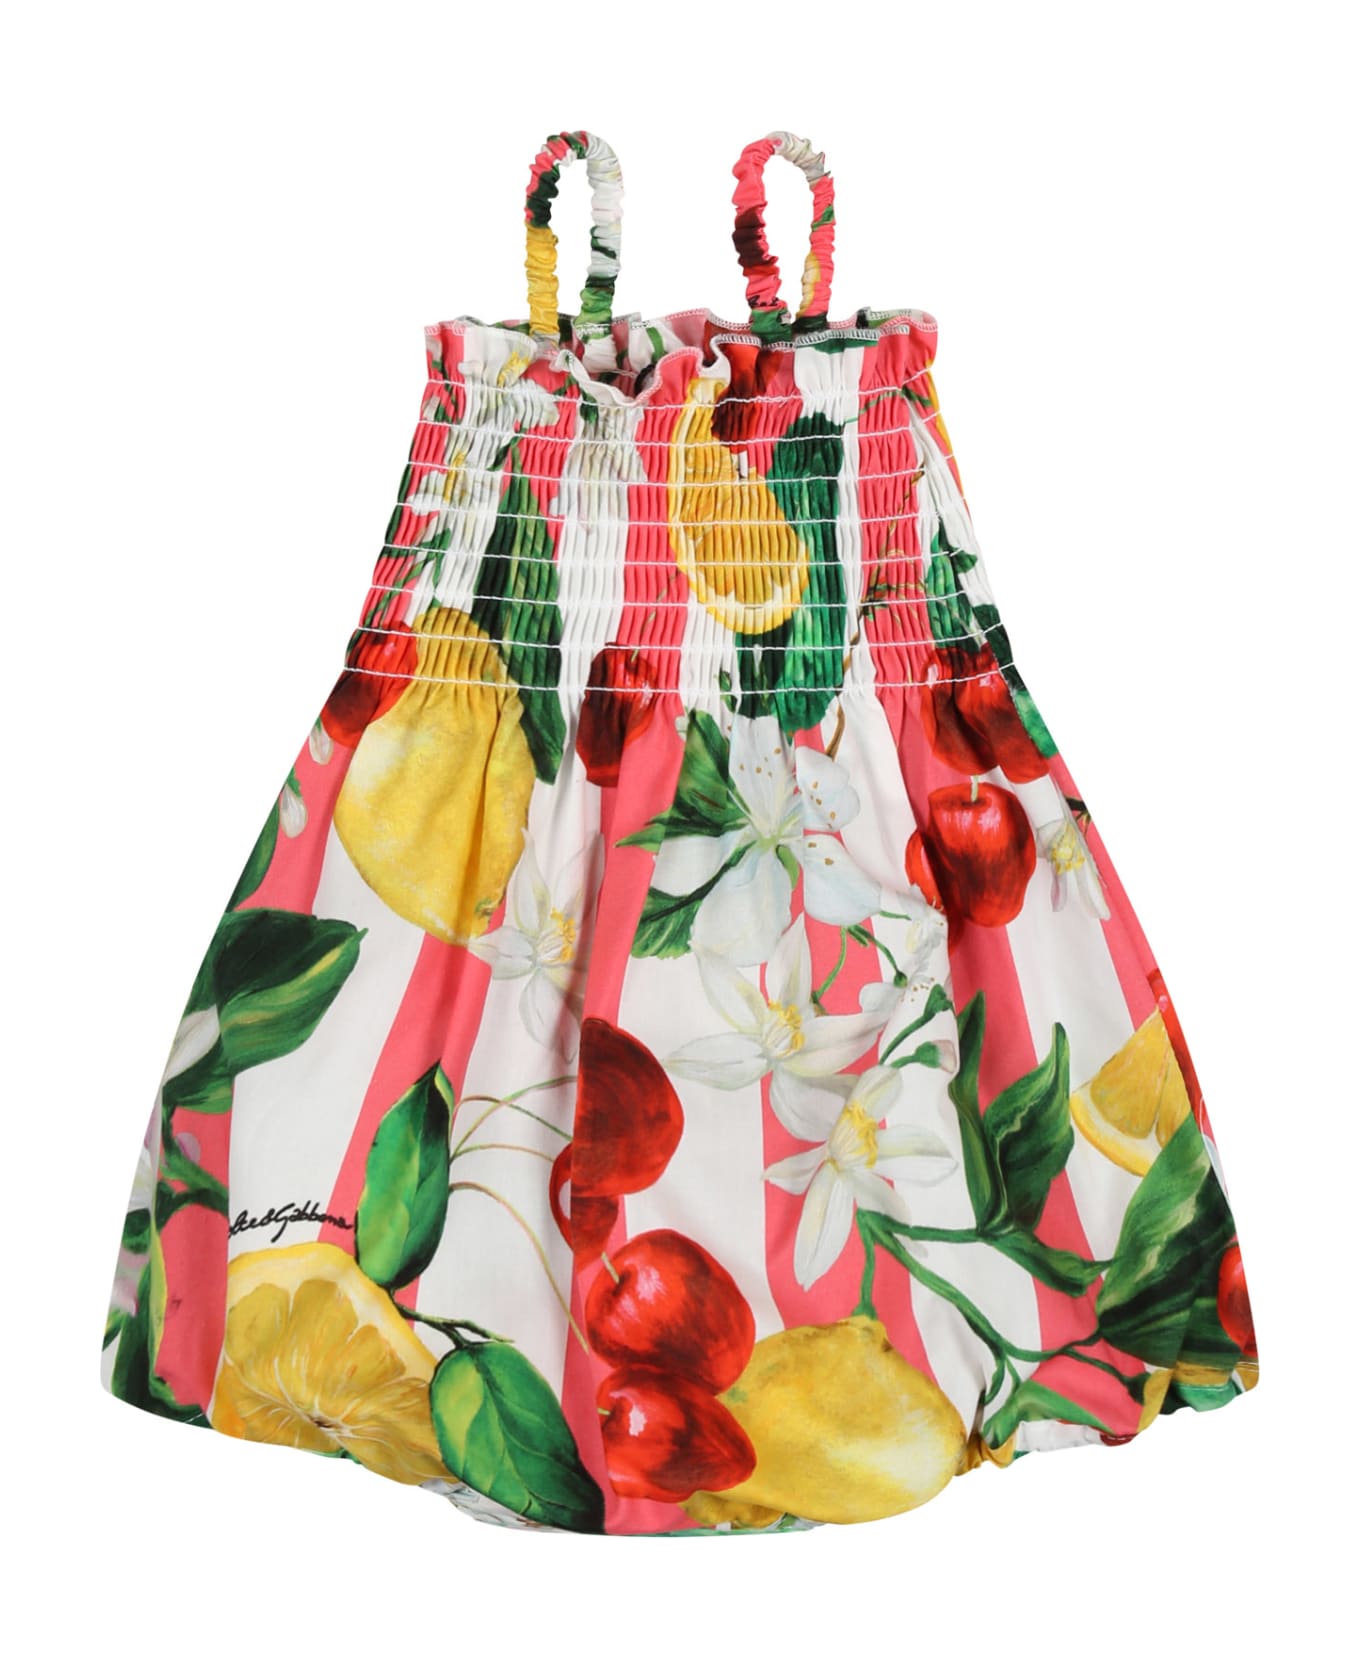 Dolce lace & Gabbana Multicolor Romper For Baby Girl - Multicolor